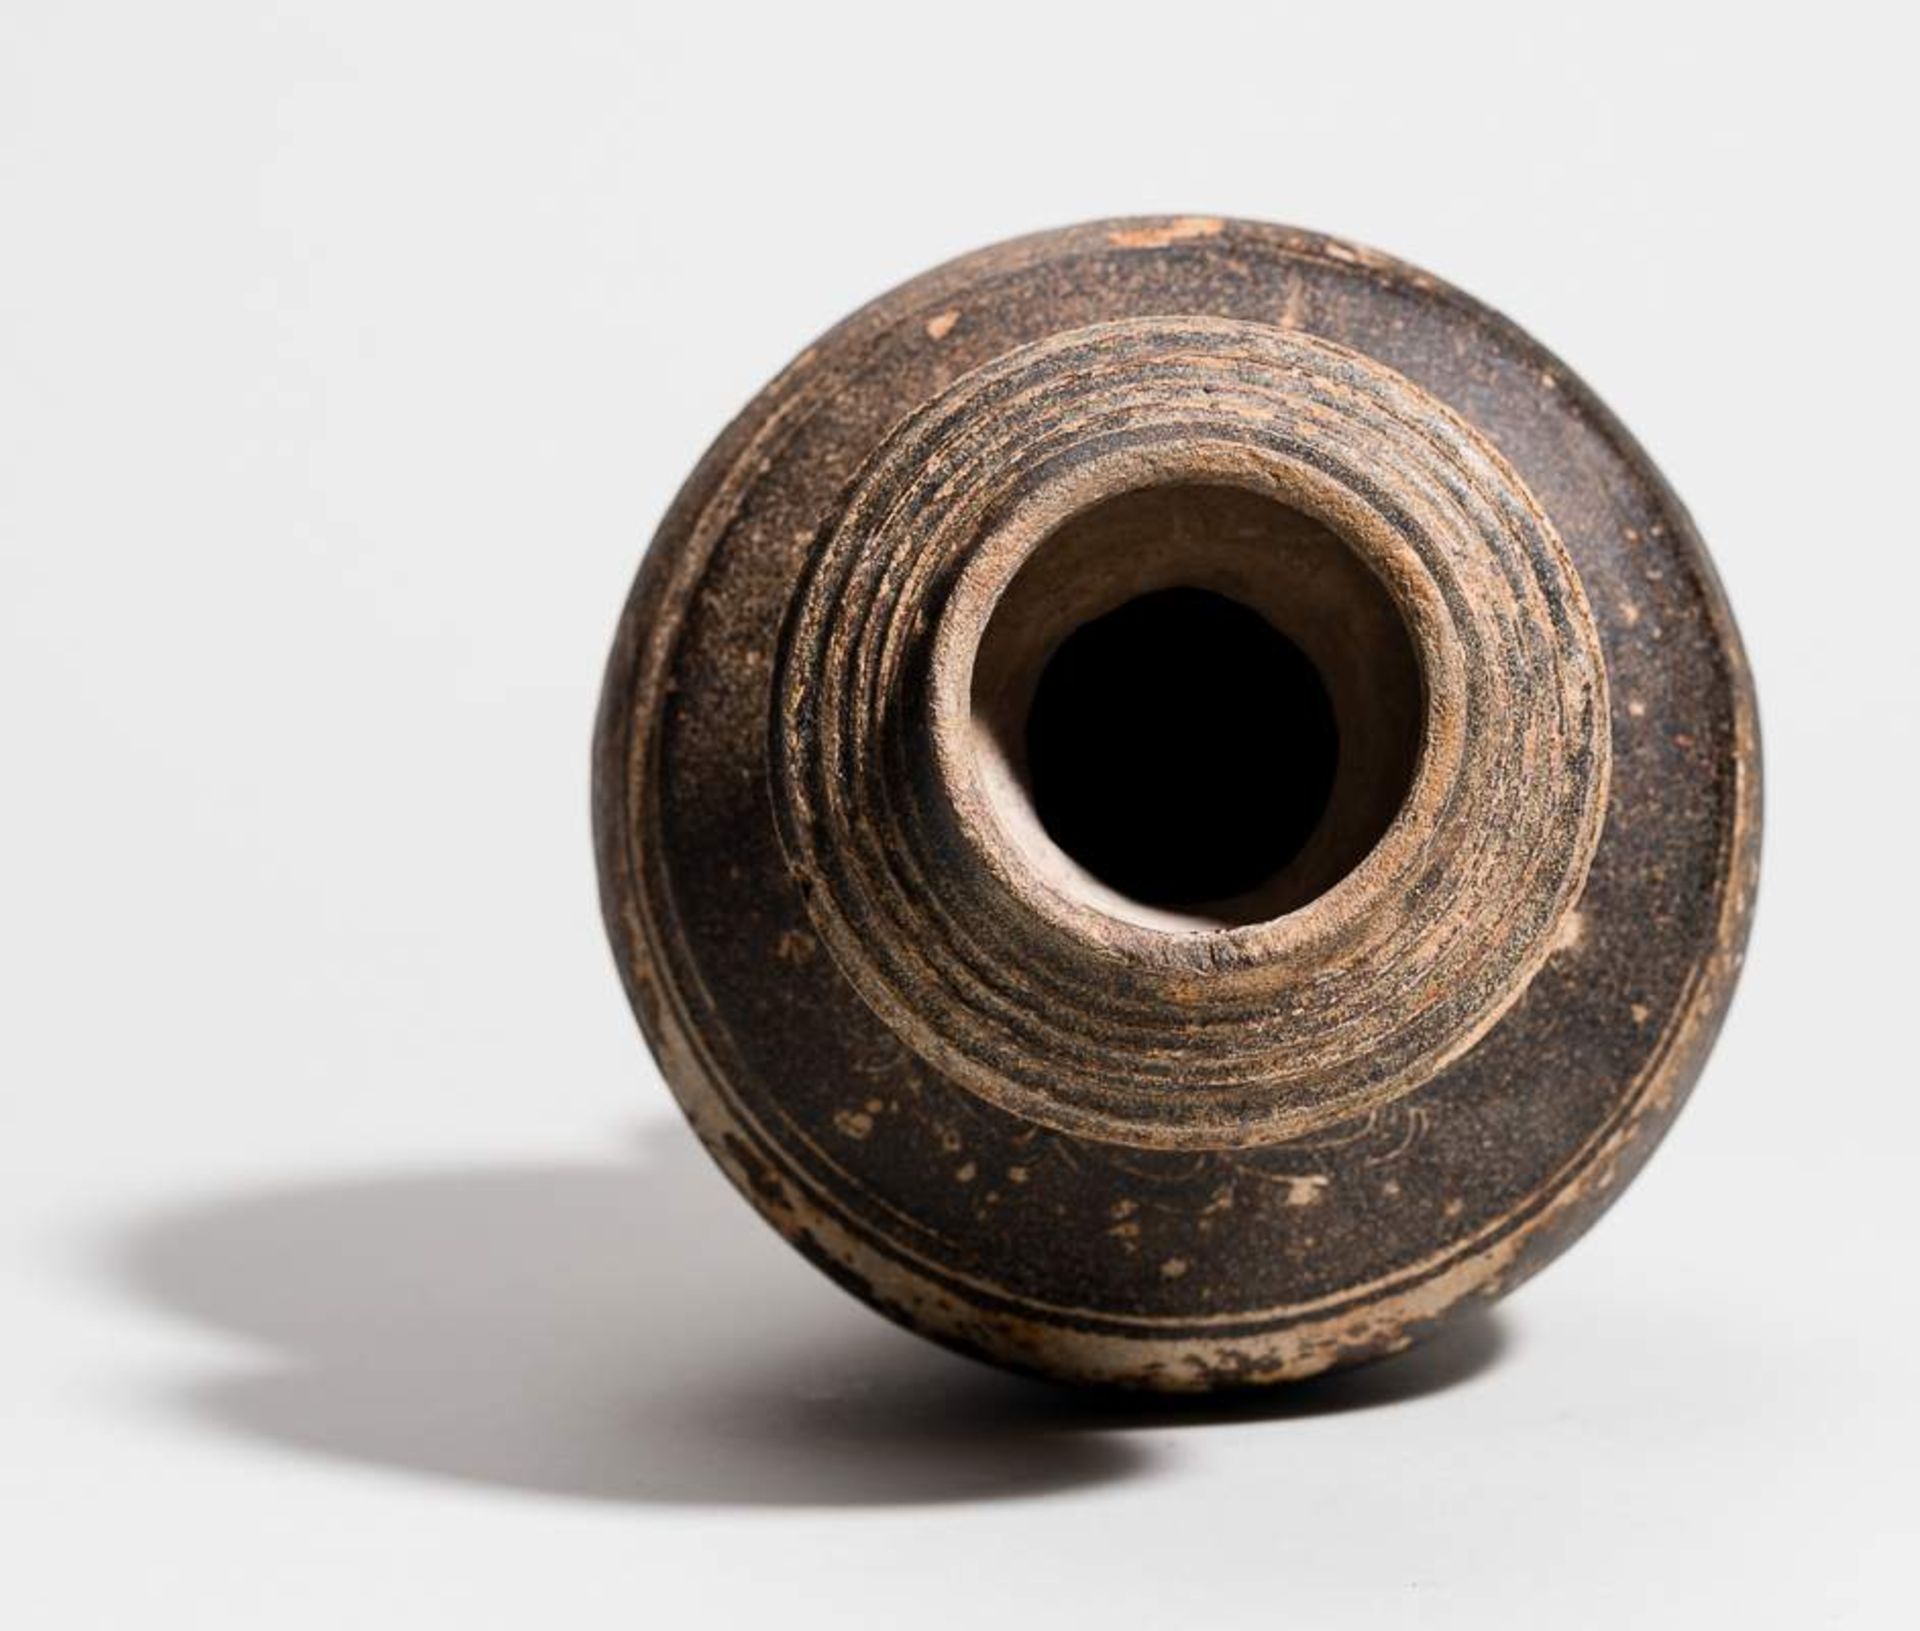 VASENFÖRMIGES GEFÄSS Keramik. Kambodscha, Altes Königreich Khmer, 11. bis 12. Jh. Seltener Typus, - Image 5 of 11